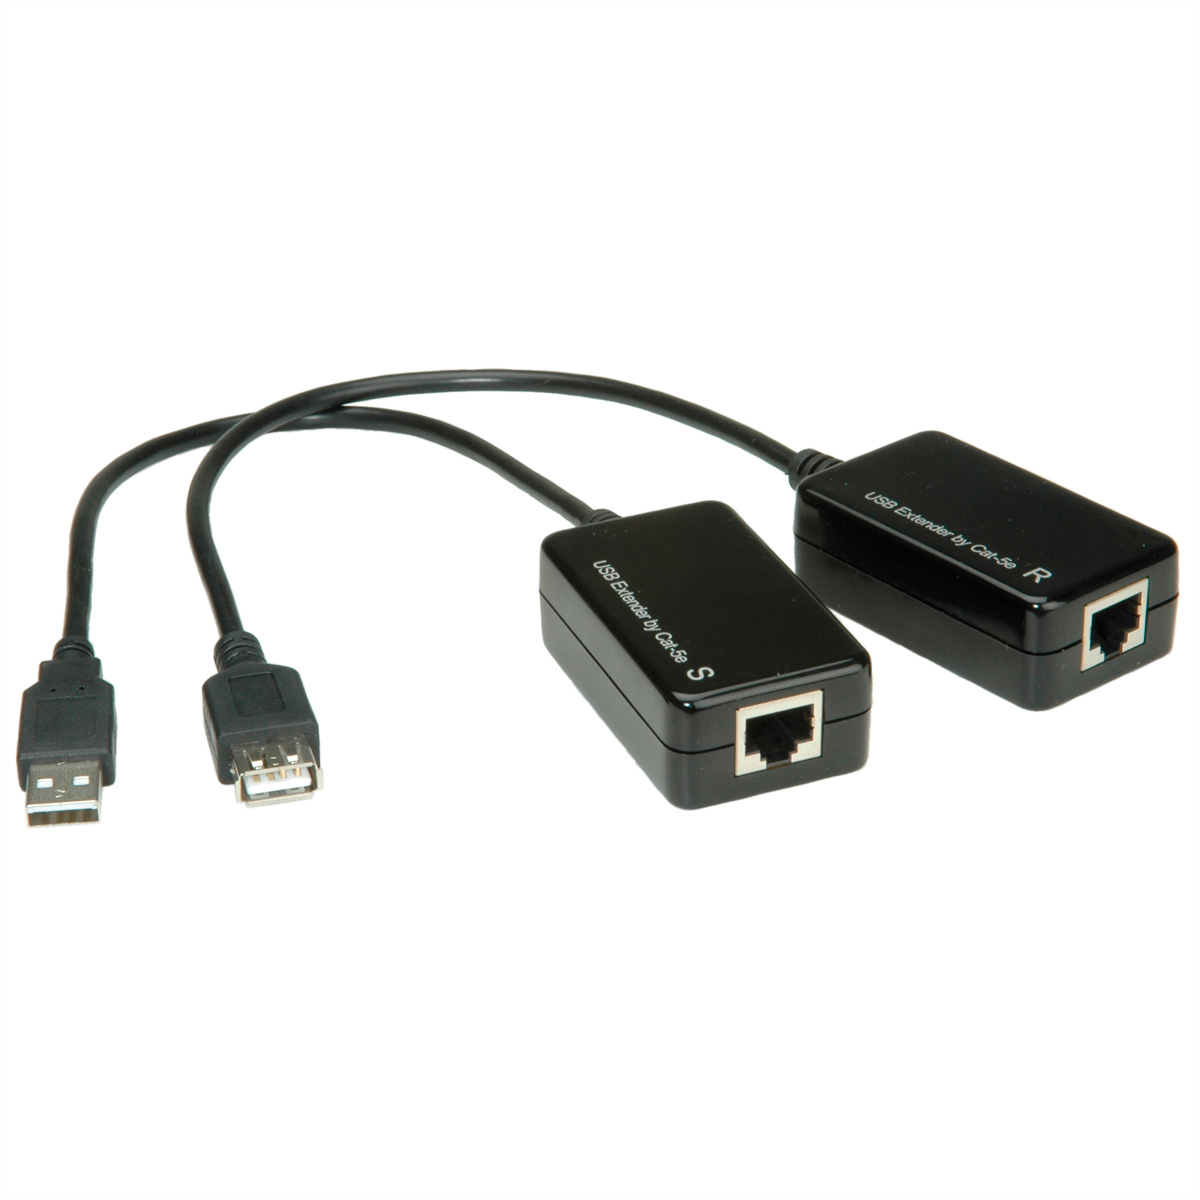 VALUE USB 1.1 45m RJ45, Verlängerung über USB-Verlängerung max